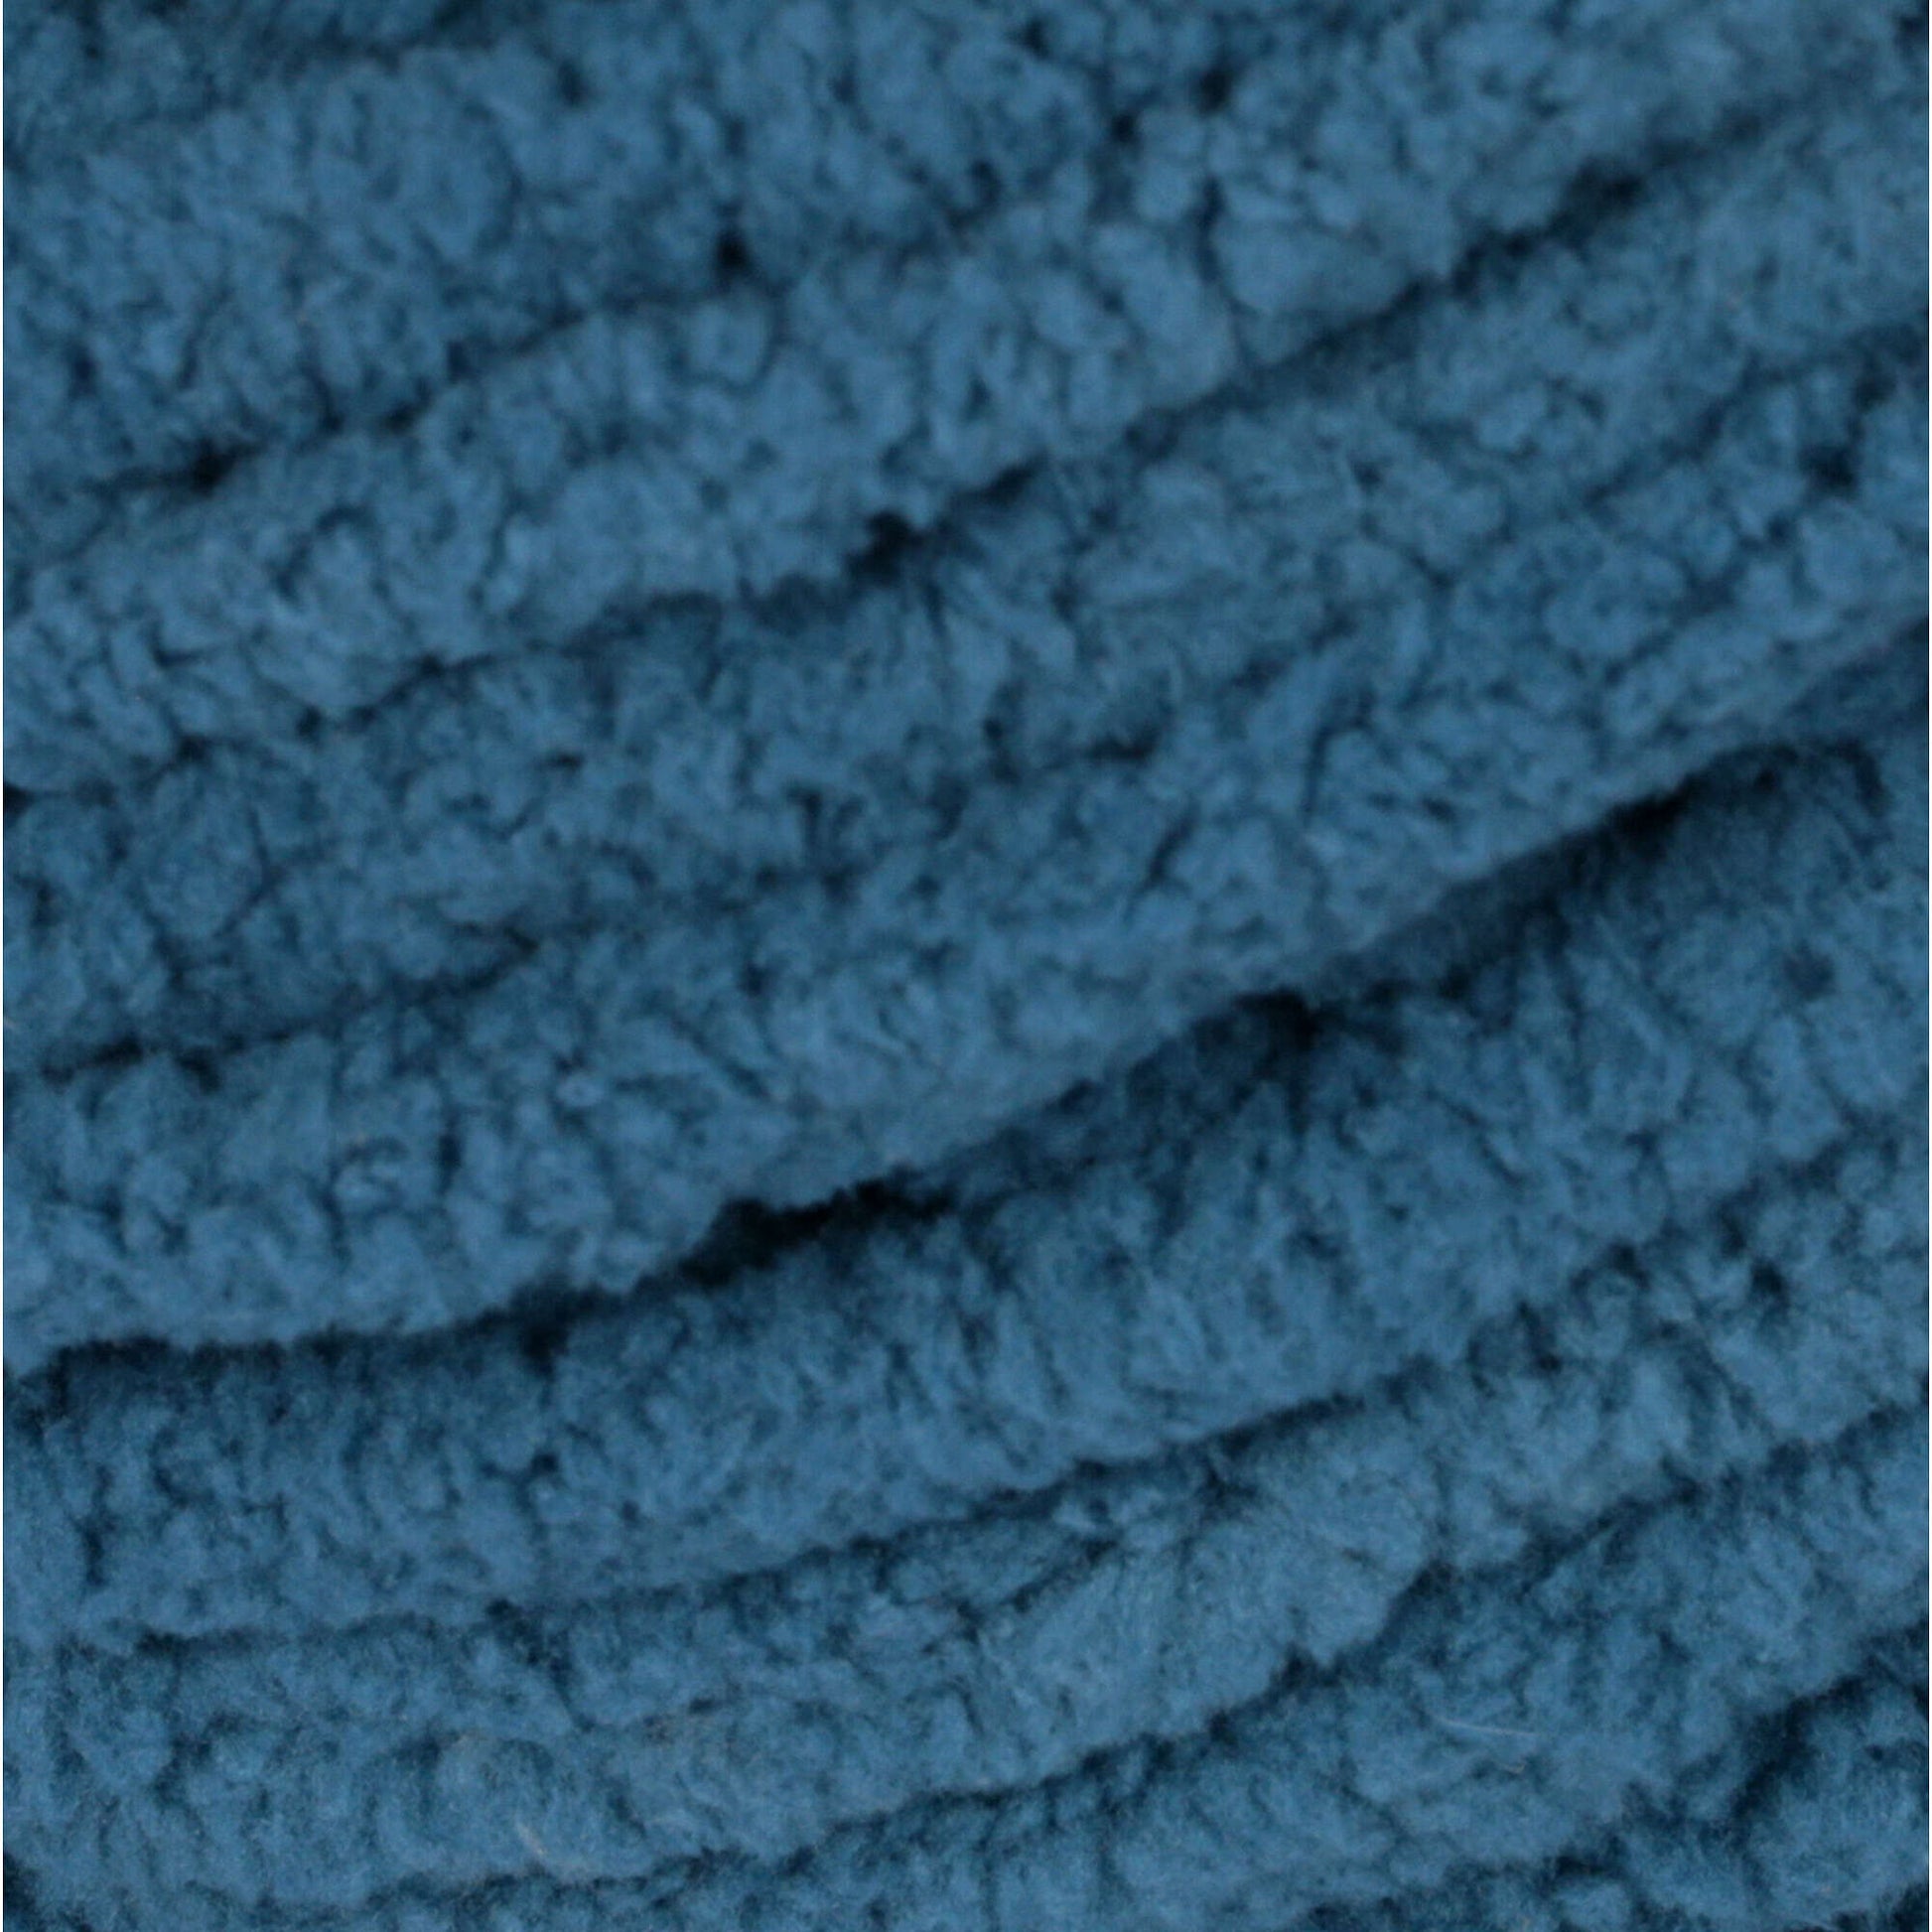 Bernat Blanket Extra Yarn-Speckled Moonrise, 1 count - Fry's Food